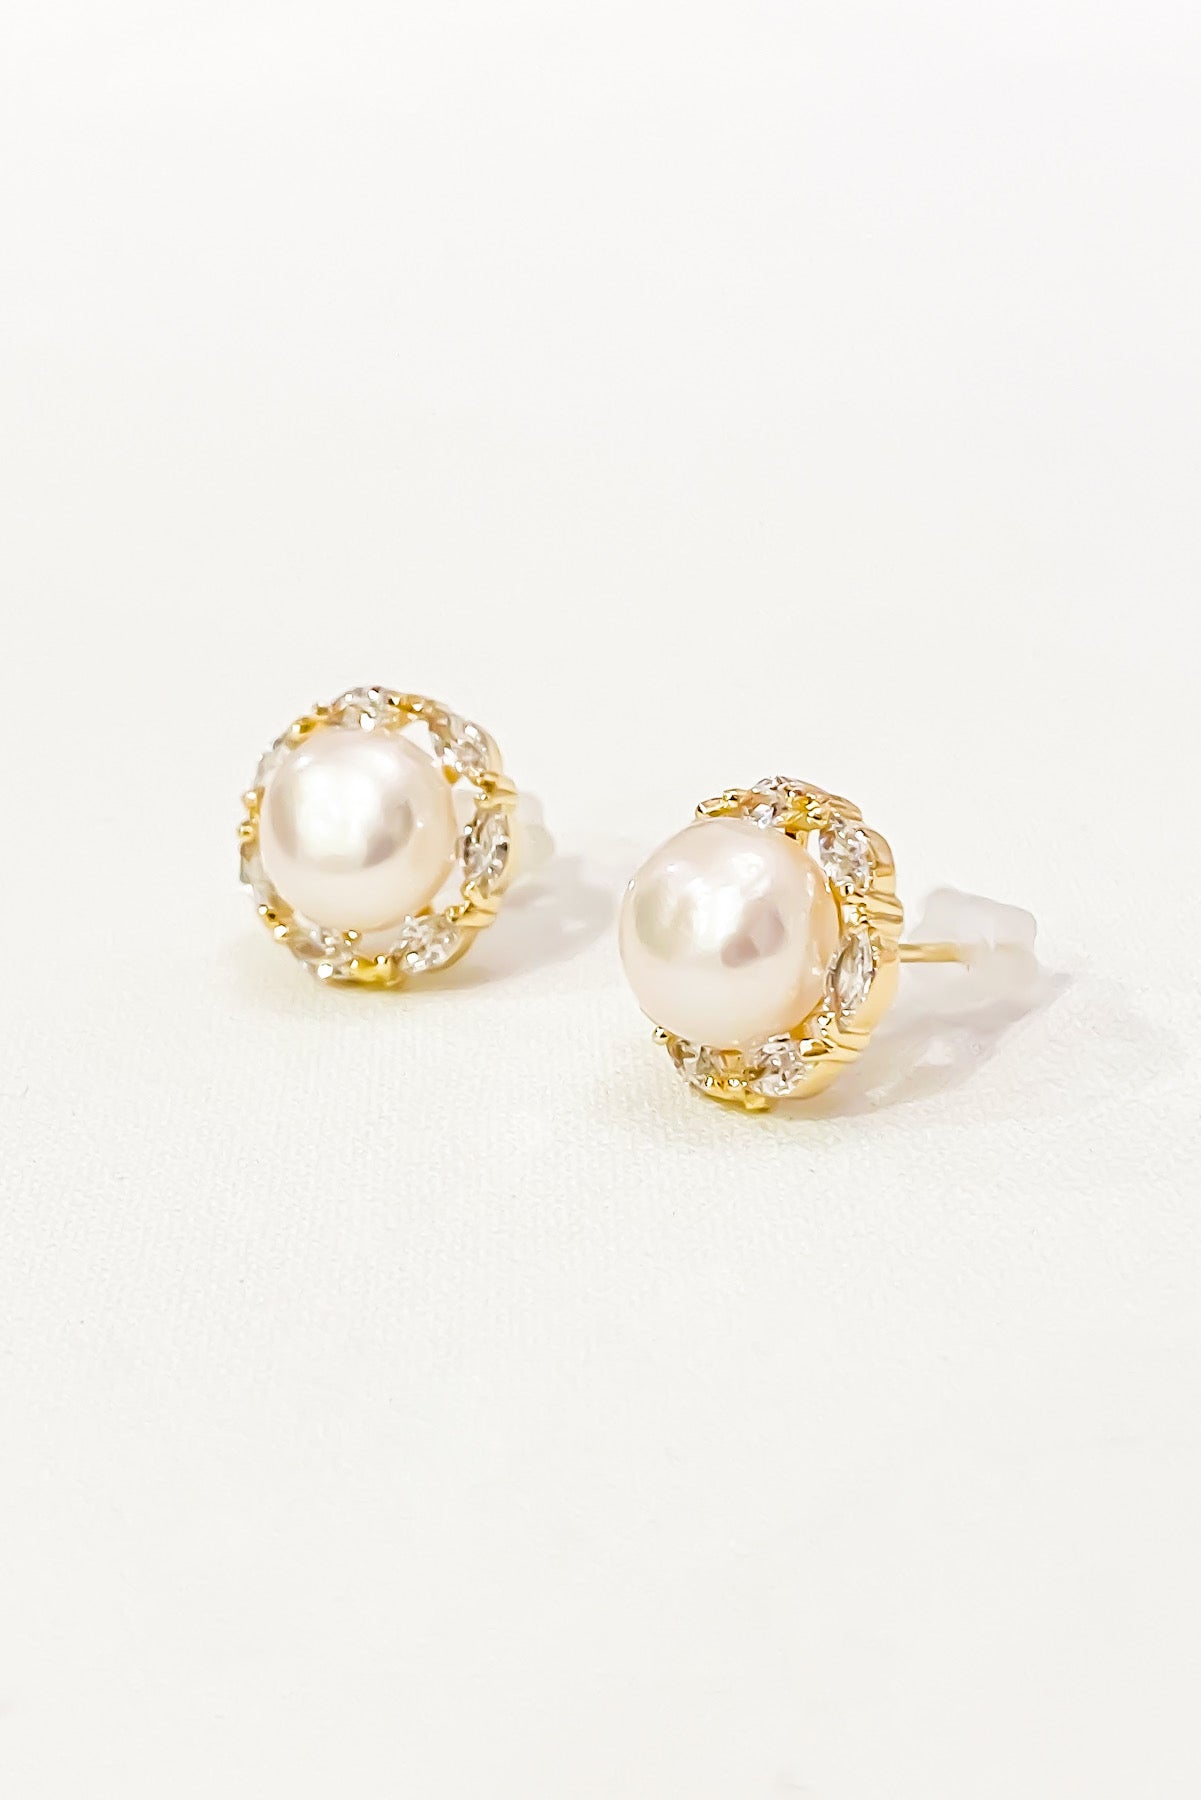 SKYE San Francisco Shop SF Chic Modern Elegant Classy Women Jewelry French Parisian Minimalist Cosette 18K Gold Pearl Earrings 7